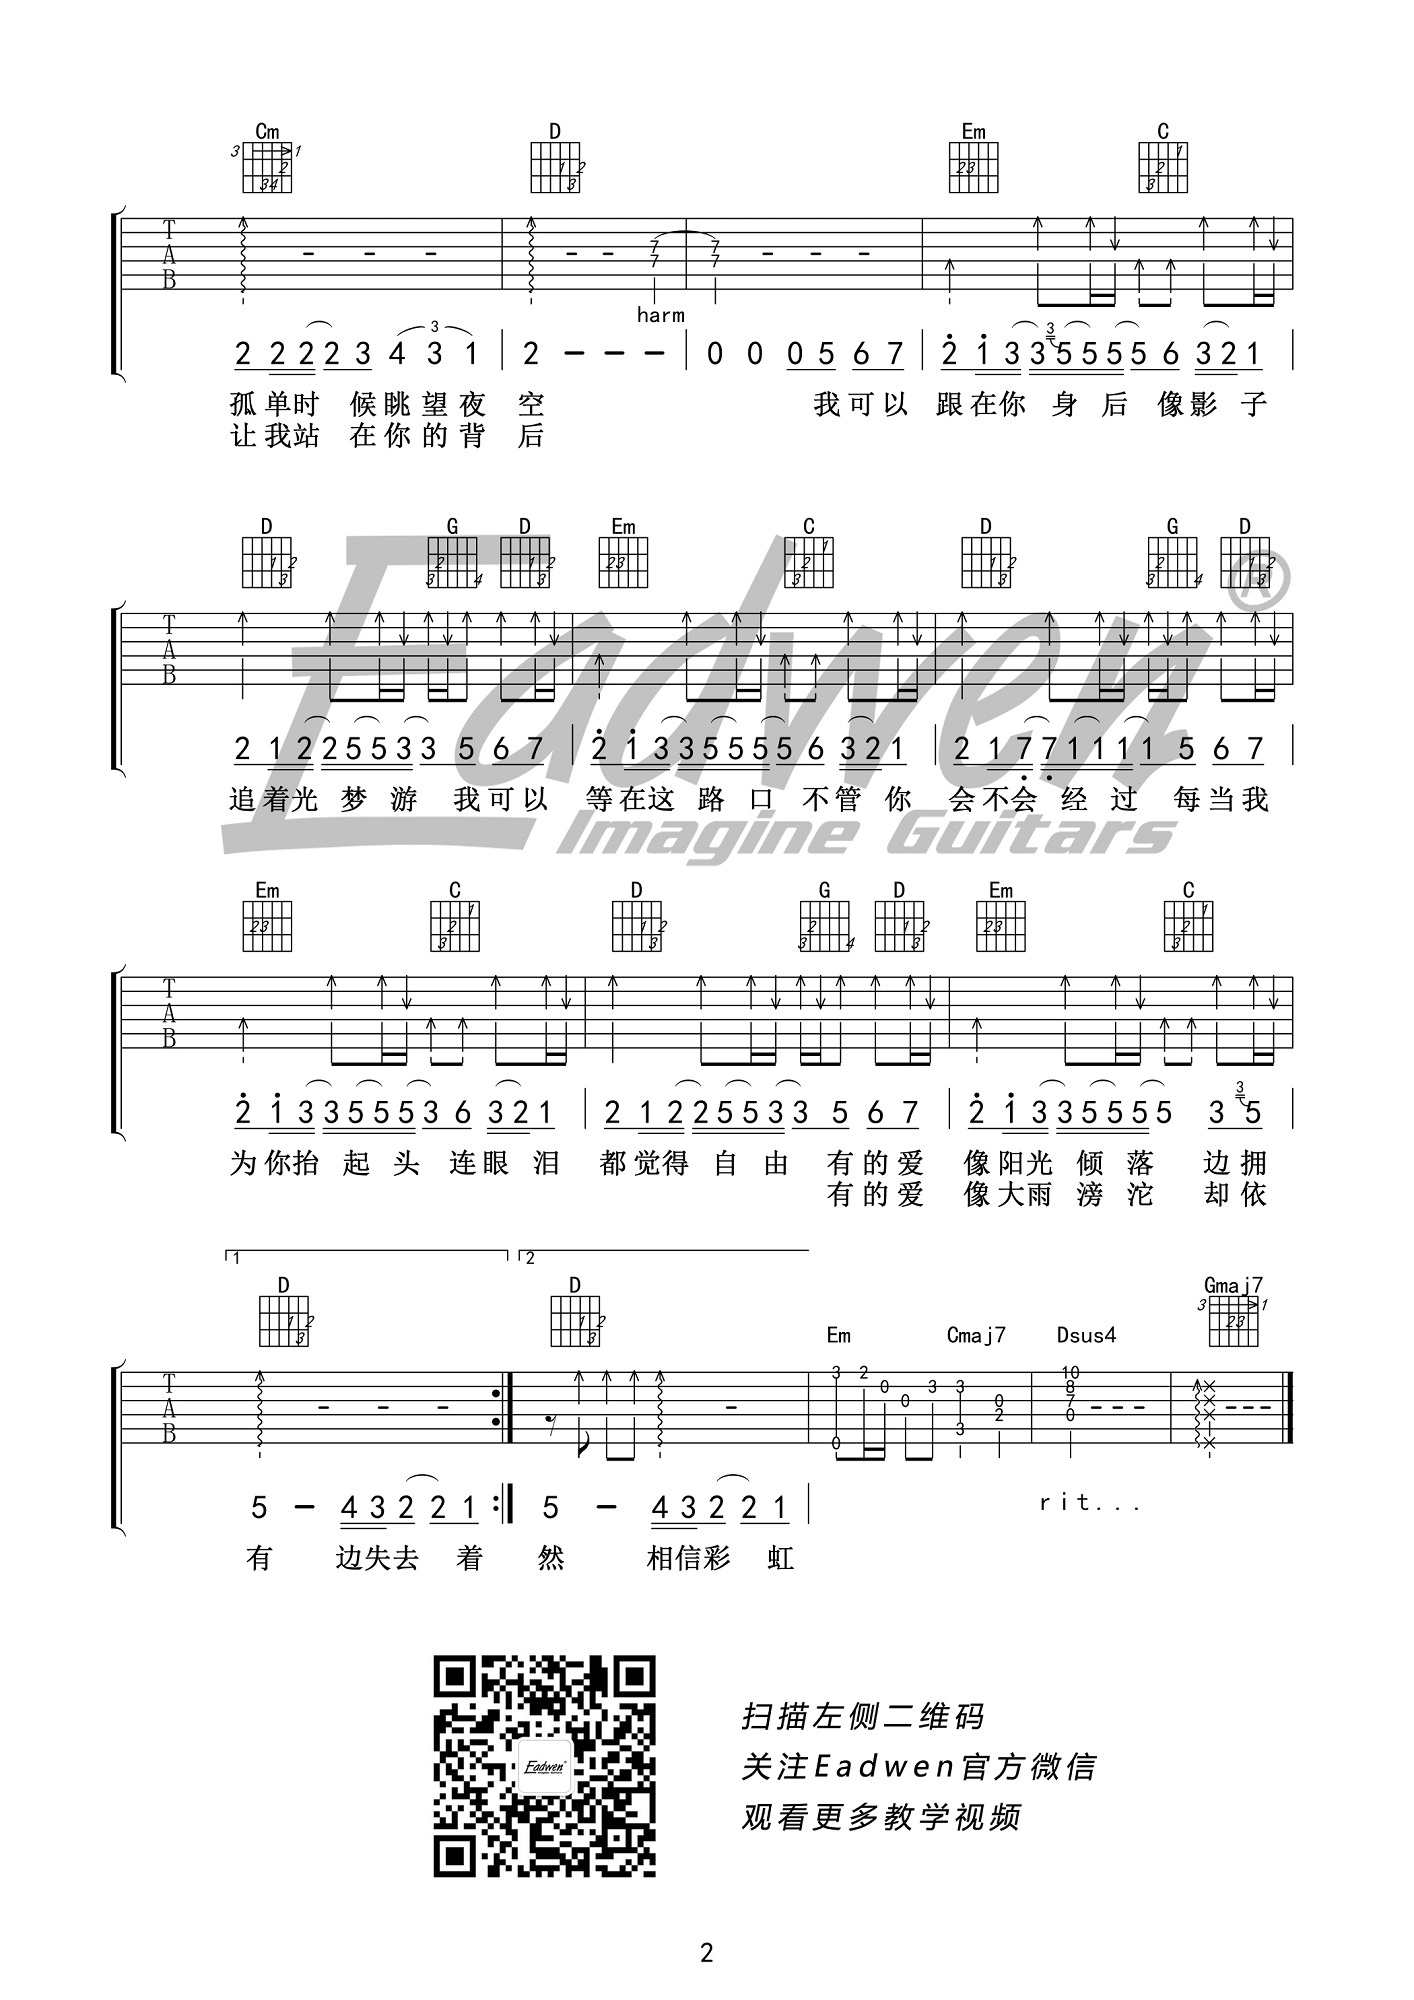 岑宁儿《追光者》吉他谱(G调)-Guitar Music Score1